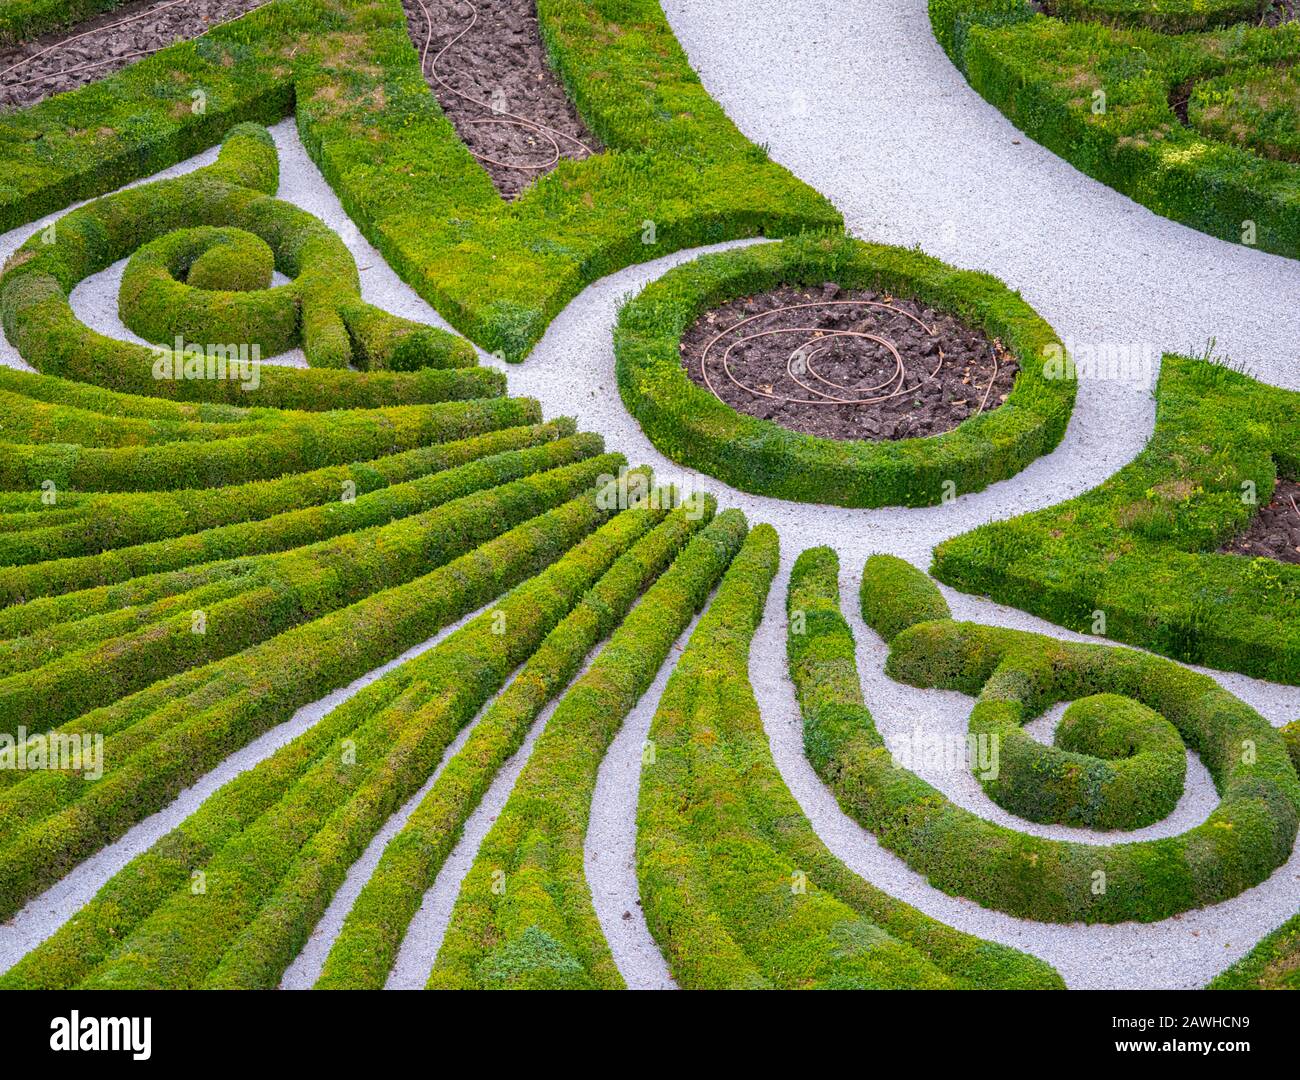 Topiary Cut En un diseño 2D En un gran jardín Foto de stock